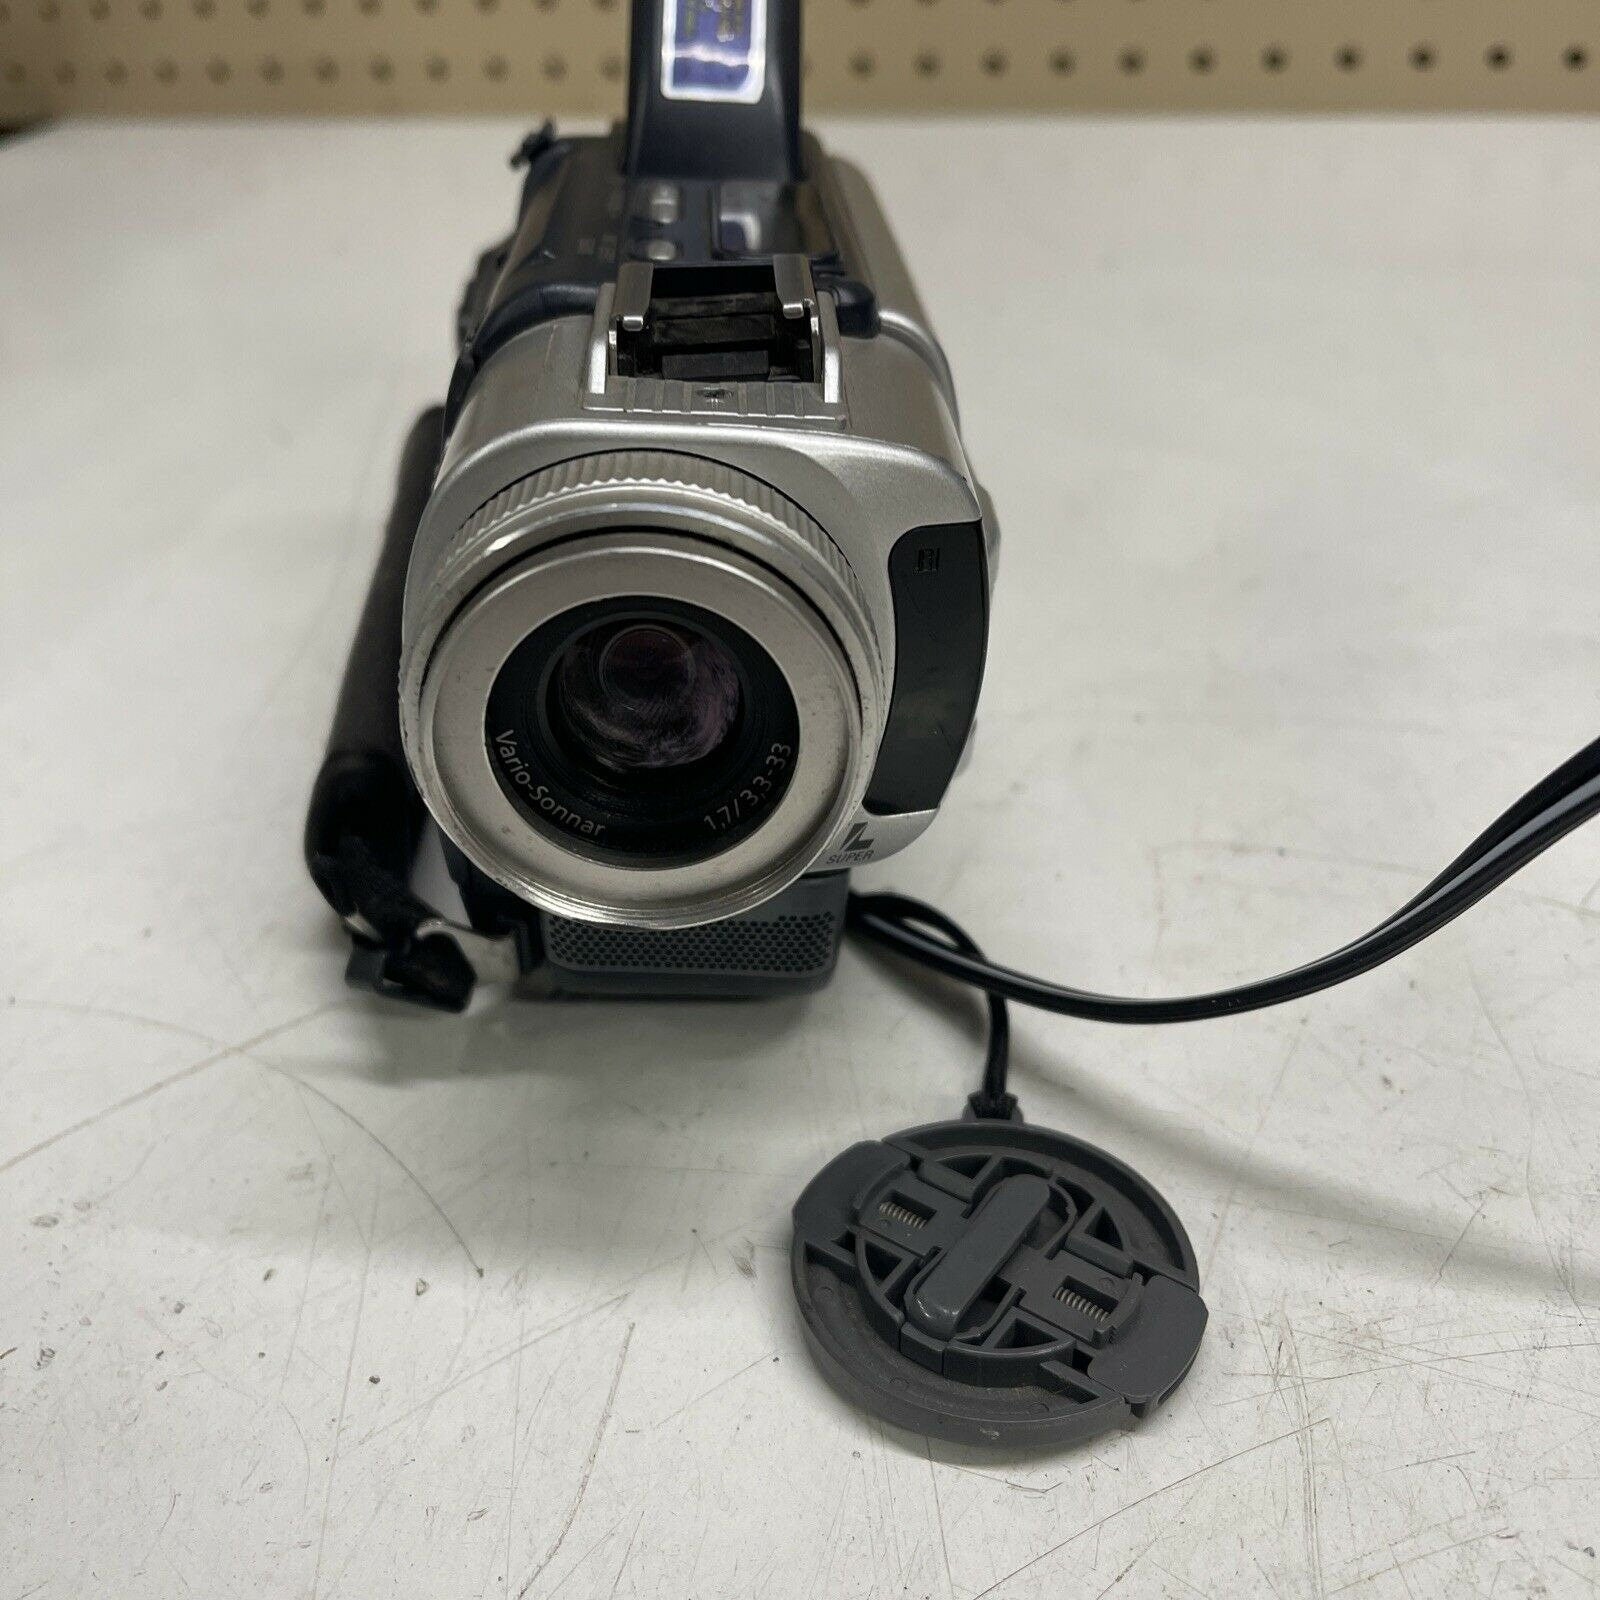 Sony Handycam DCR-TRV17 MiniDV Digital Camcorder